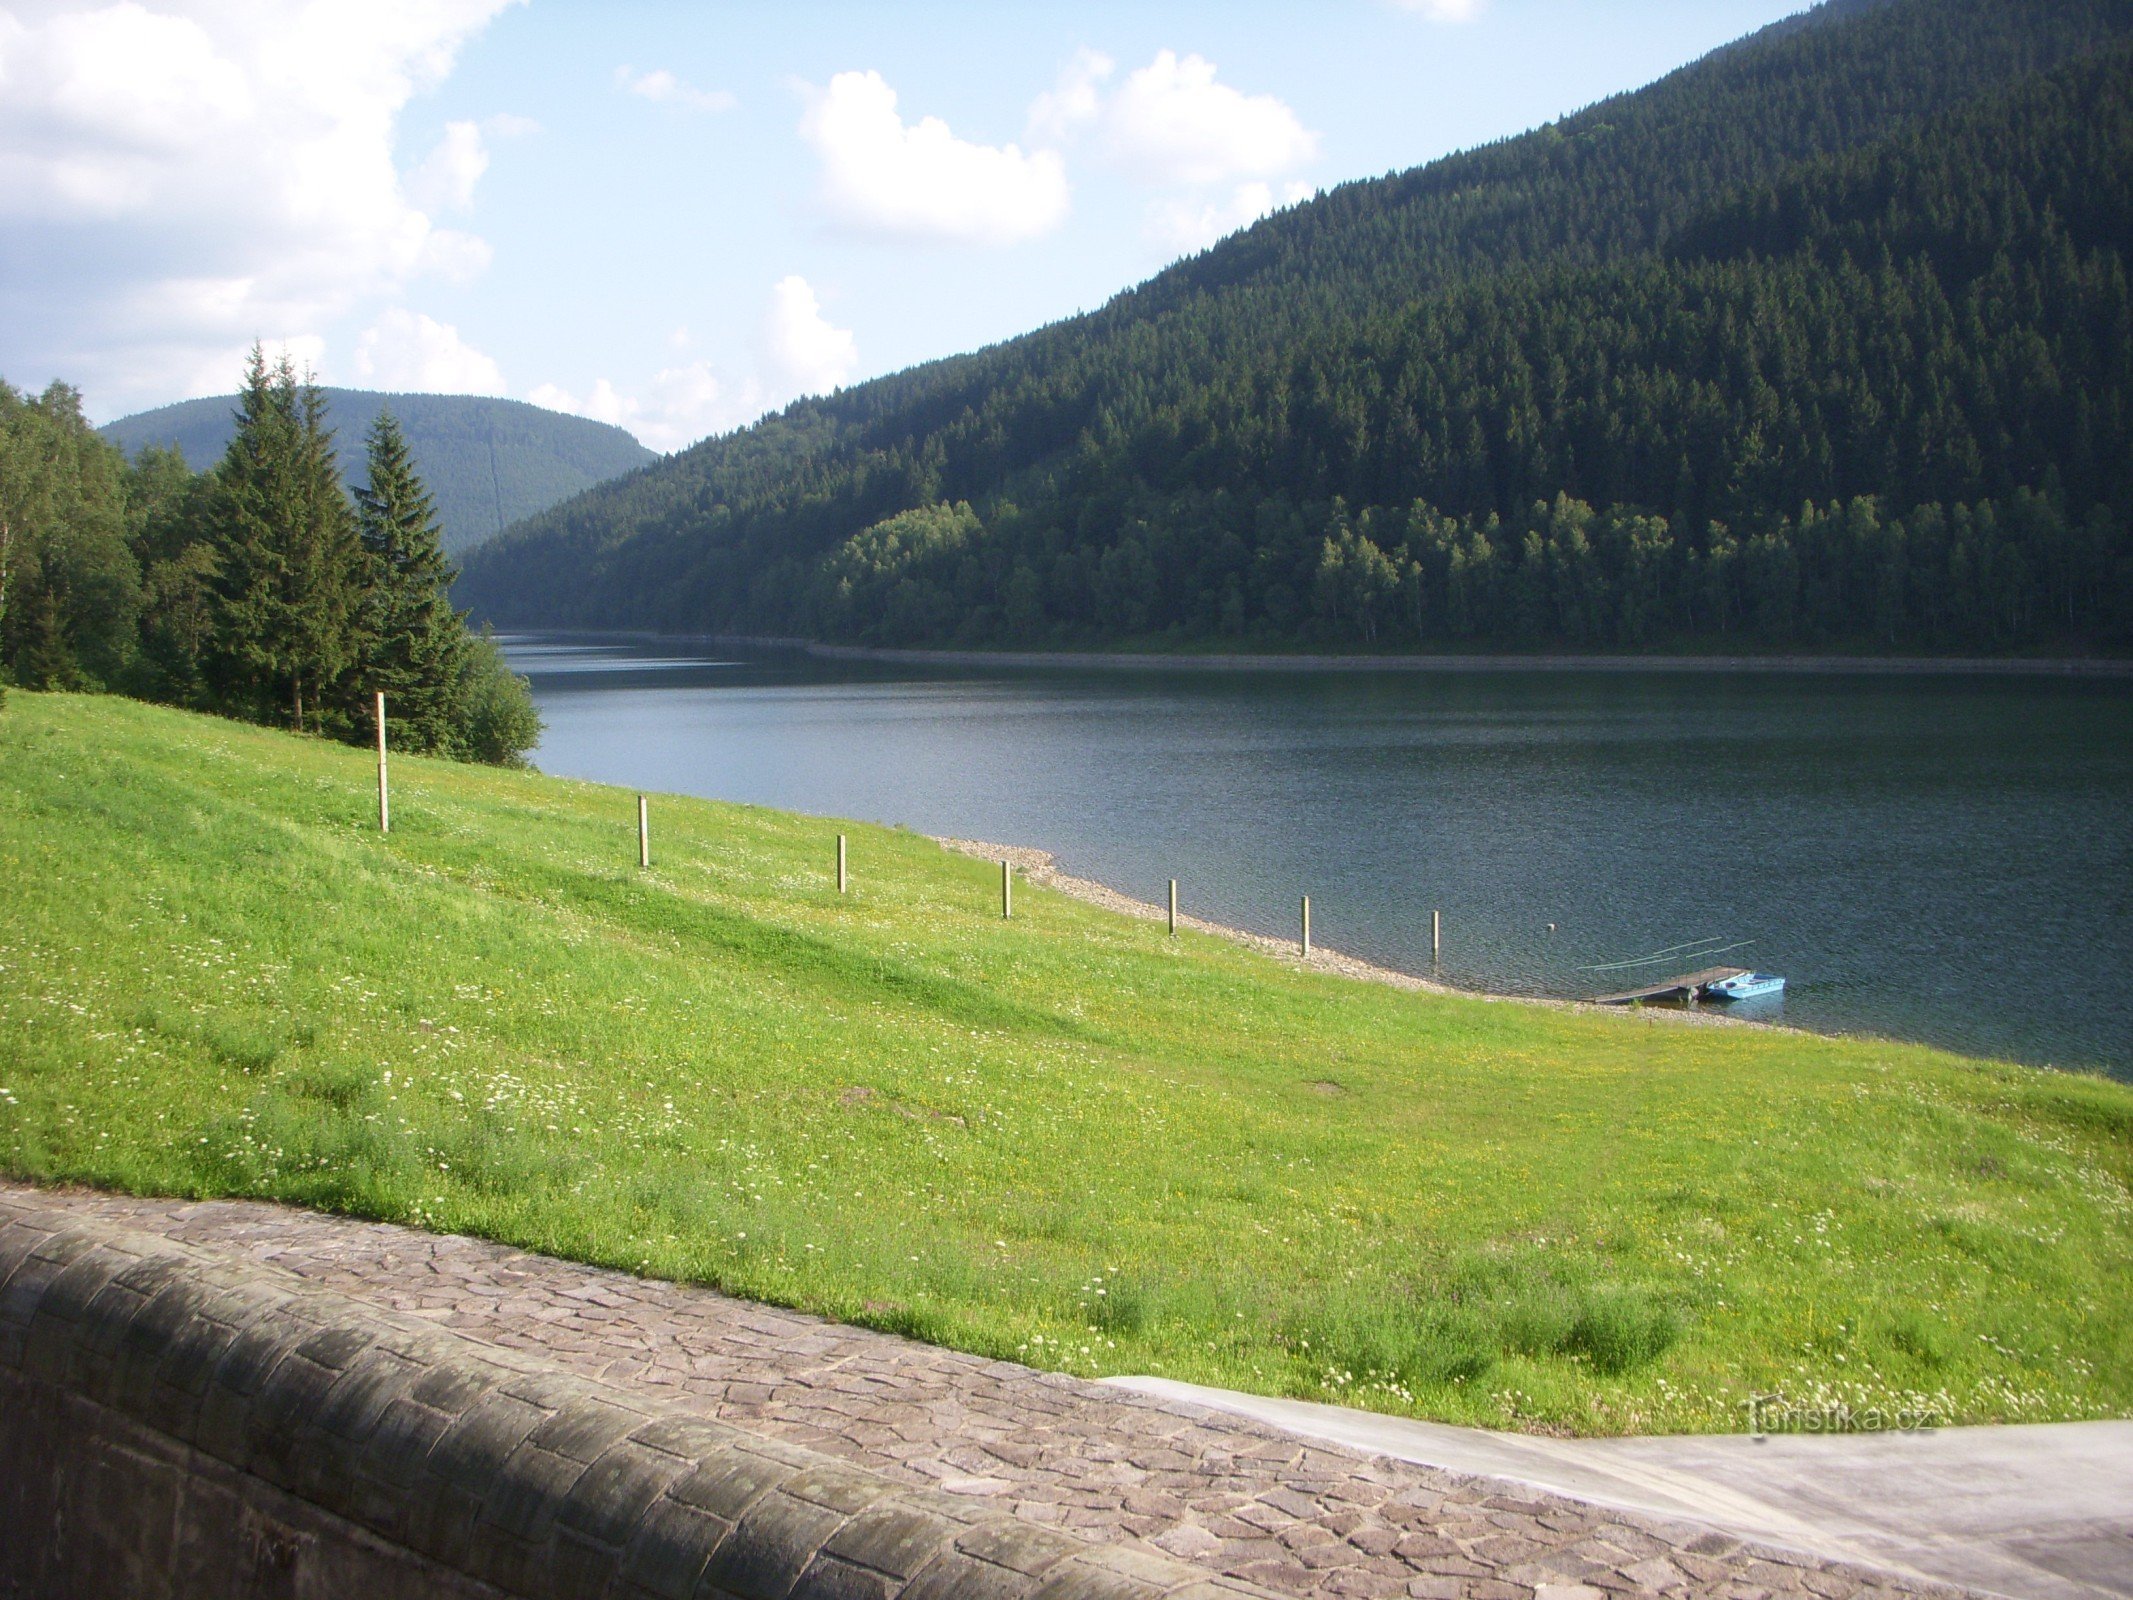 Morawka Dam